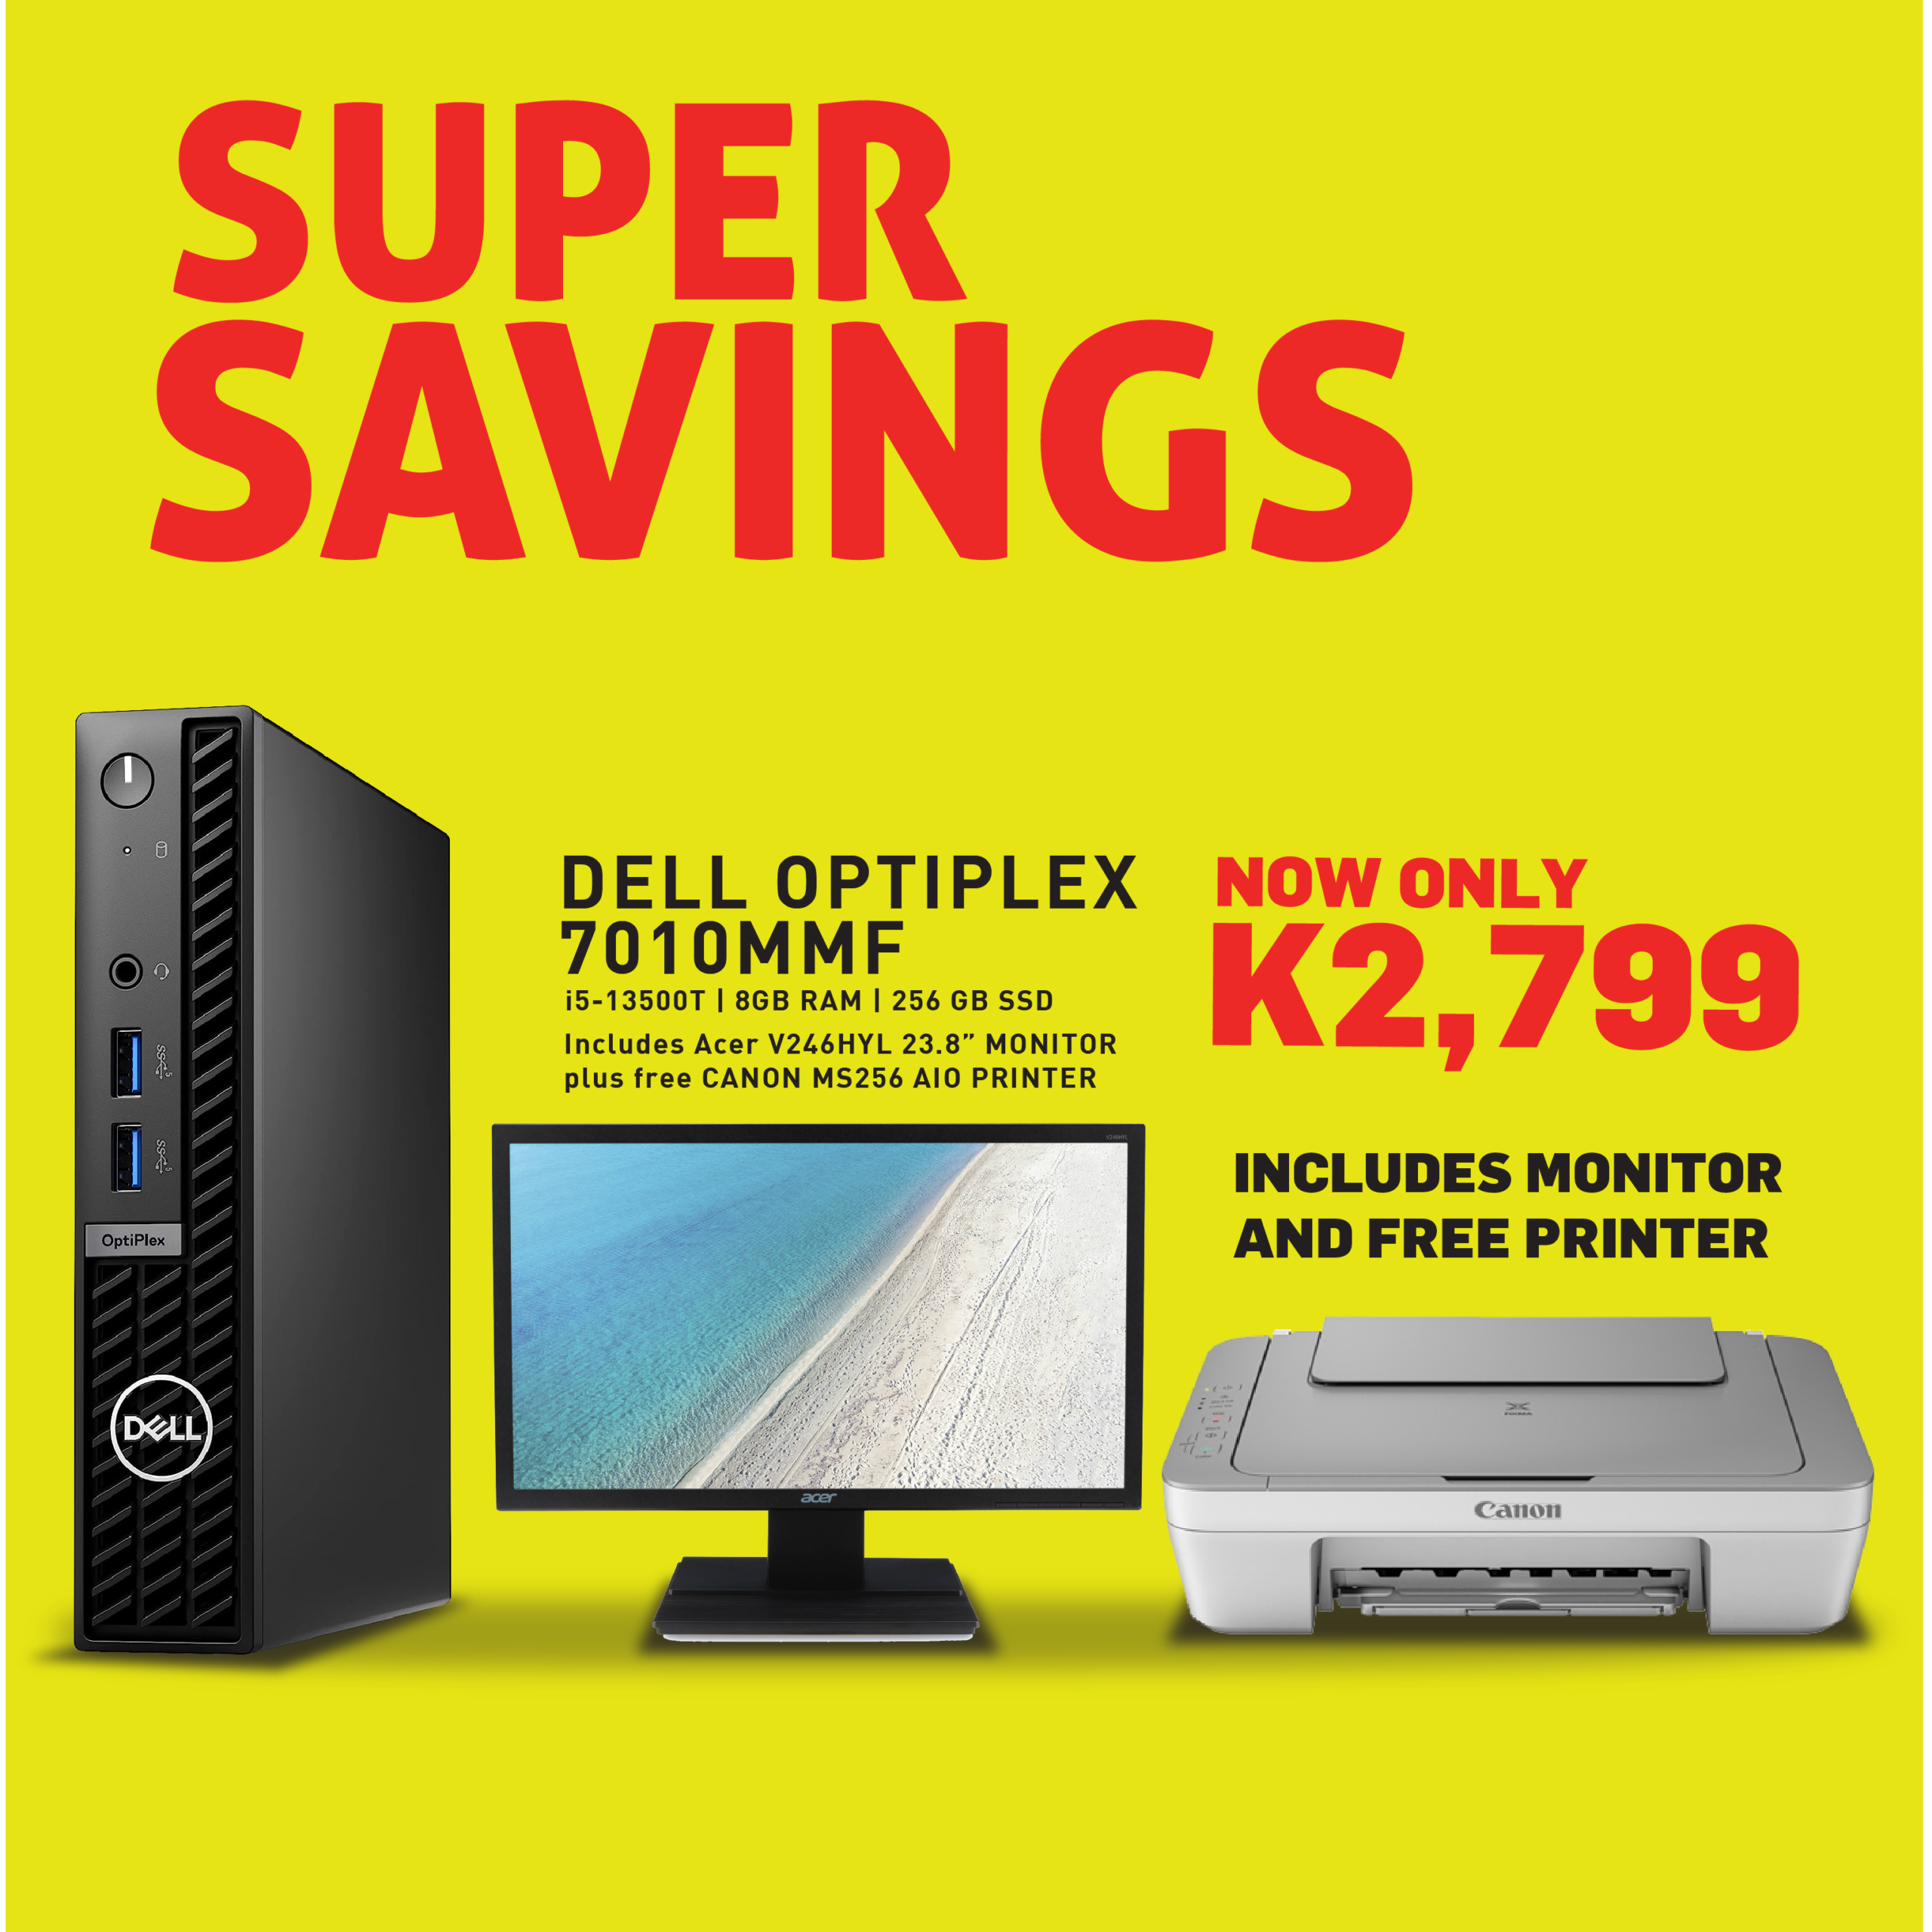 July_Super Savings_Lenovo Ideapad1 and Dell Optiplex_Web Posters-02